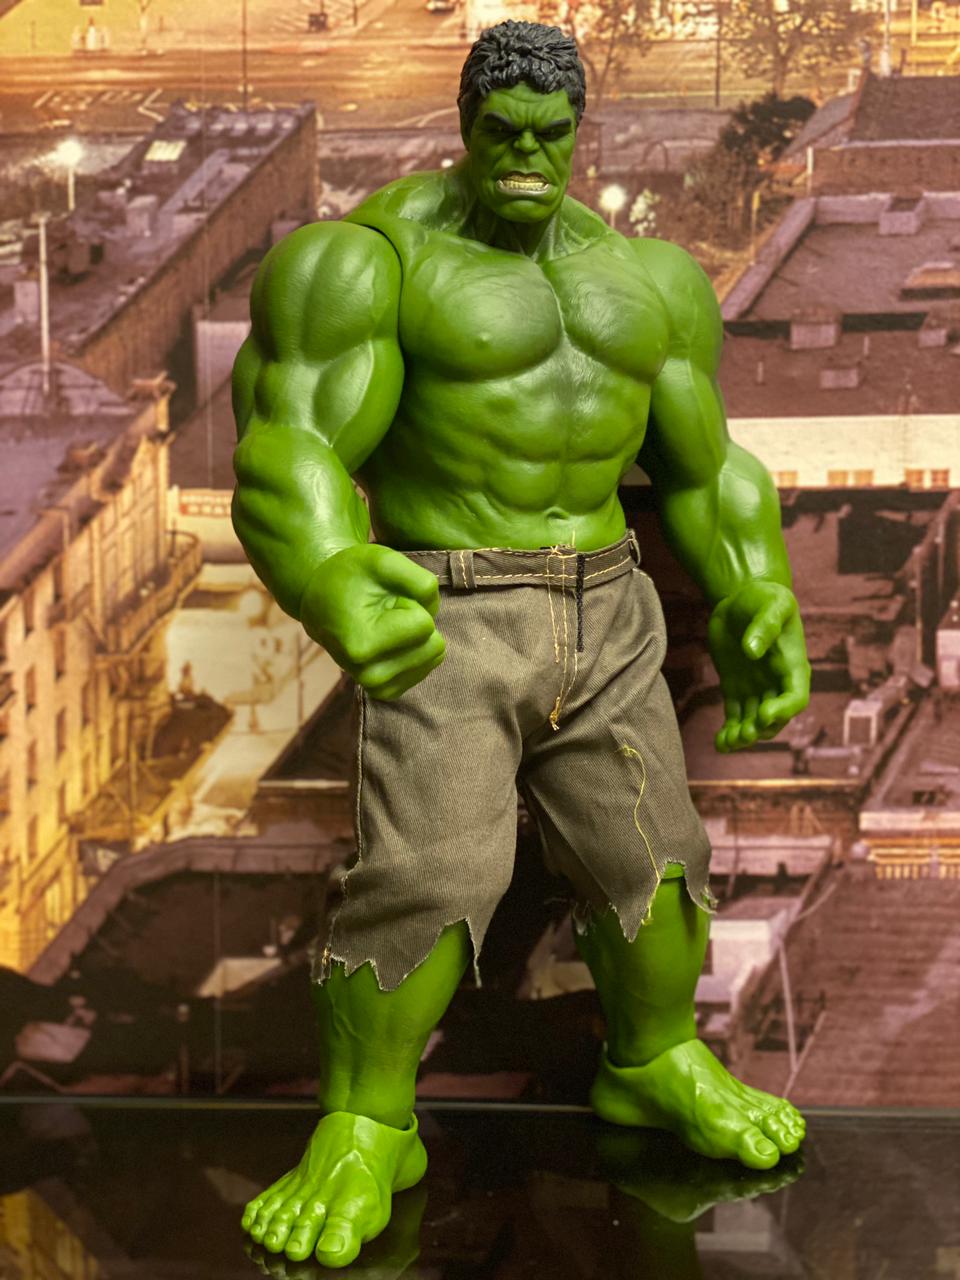 Action figure O Incrível Hulk The Incredible Hulk: Vingadores Avengers Marvel Comics 43 cm